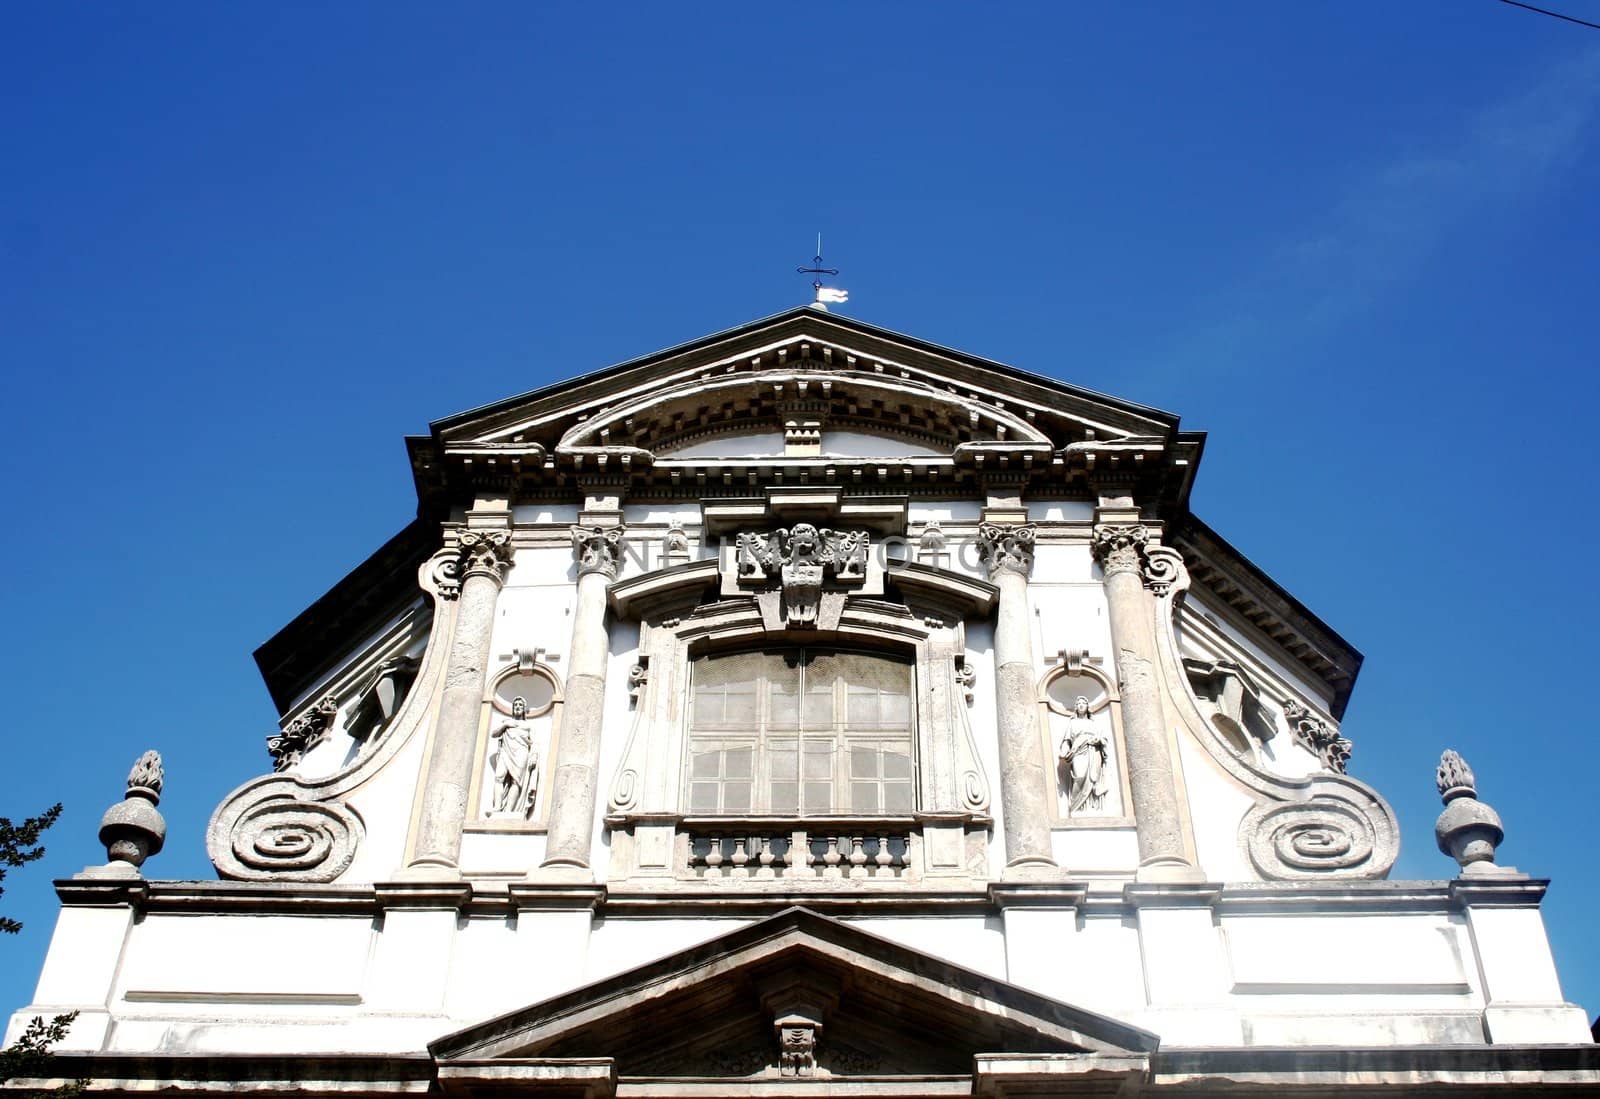 Church facade details by adrianocastelli